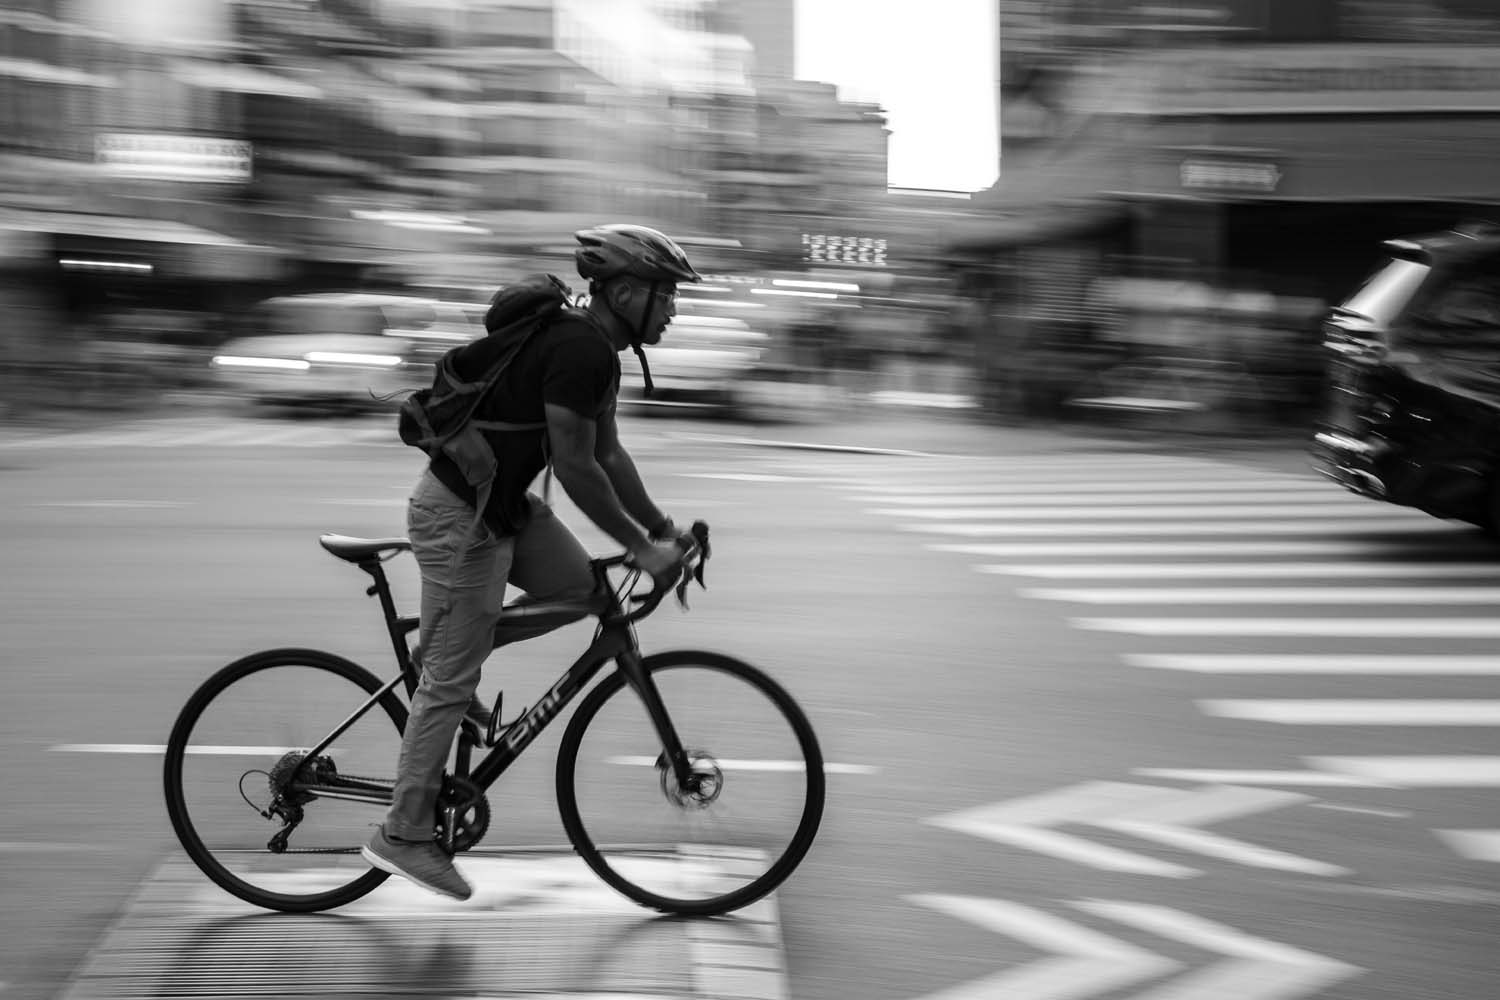 Man cycling in New York City traffic